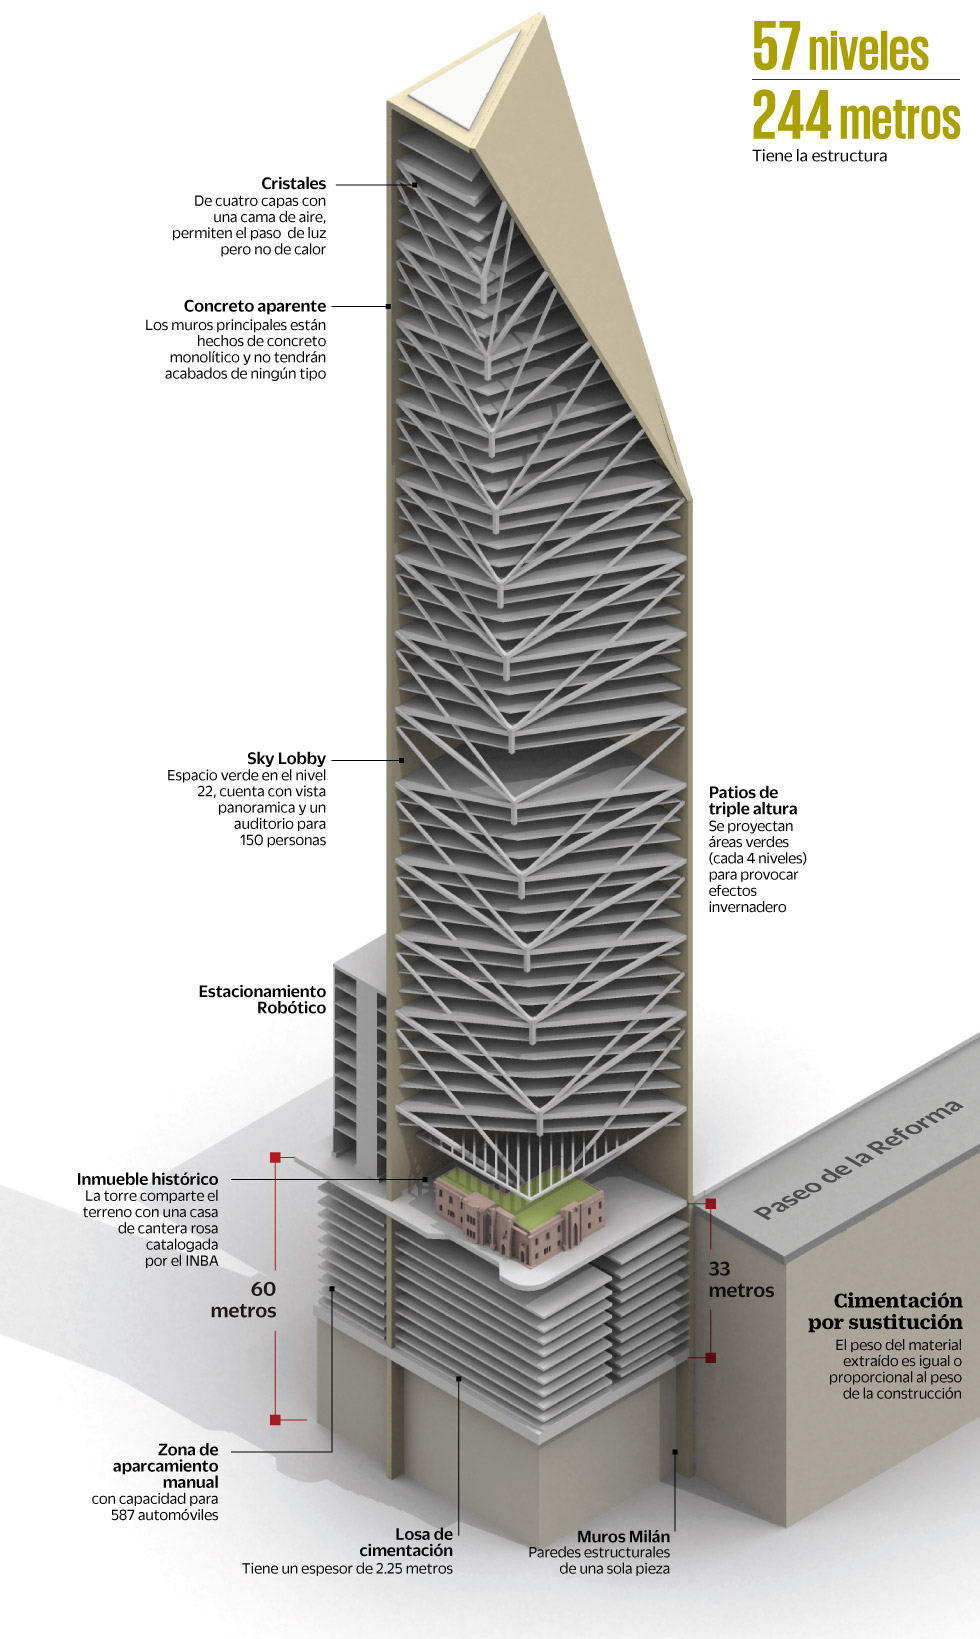 Torre de Reforma